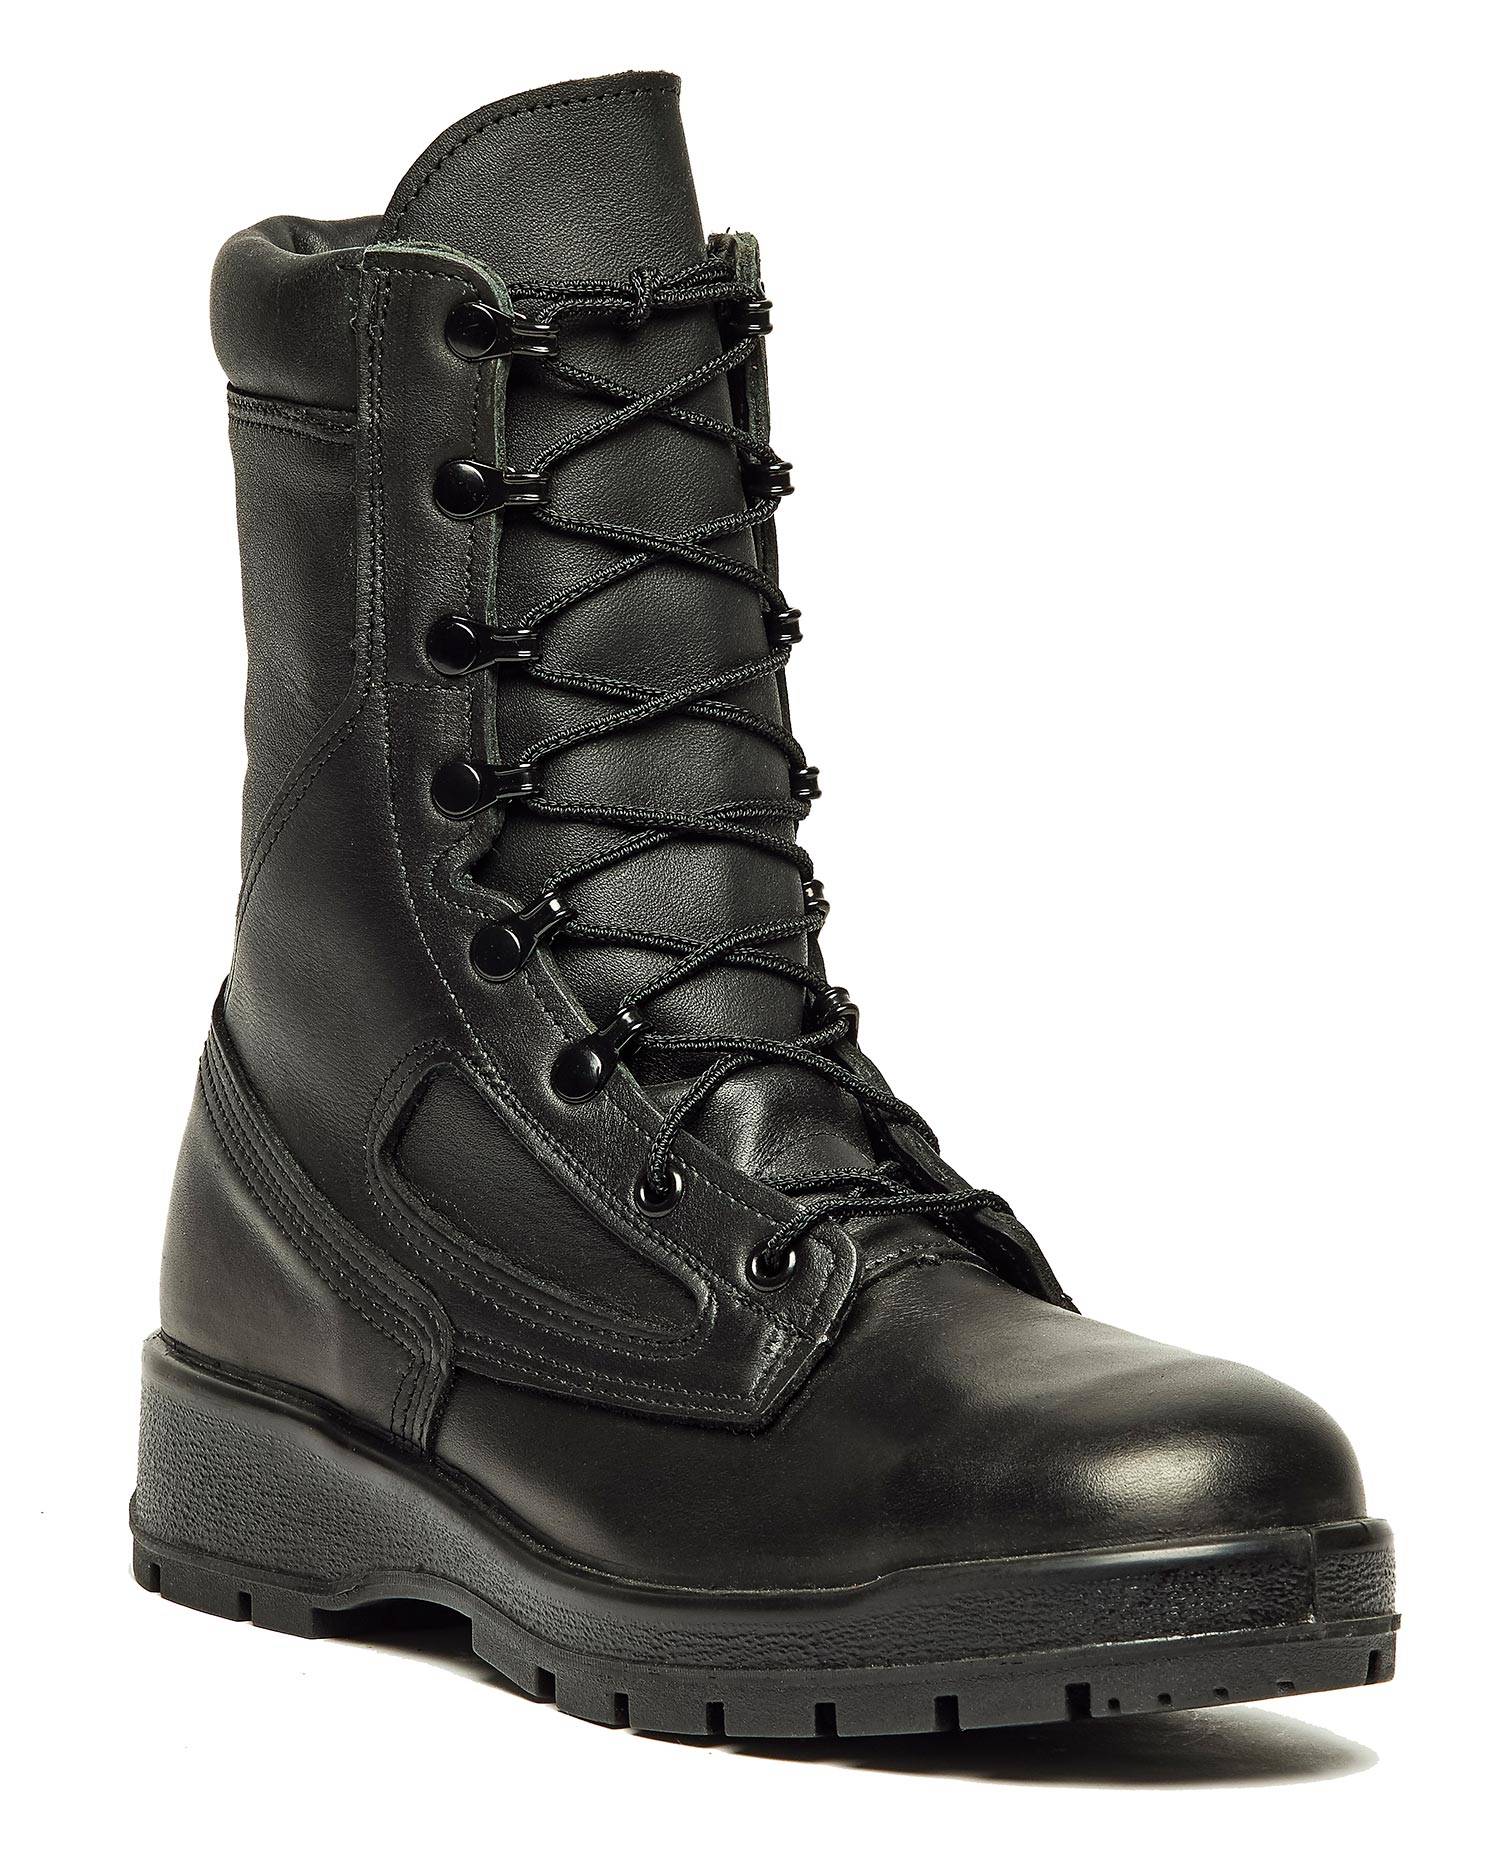 Belleville Women's US Navy 'I-5' Steel Toe Boots